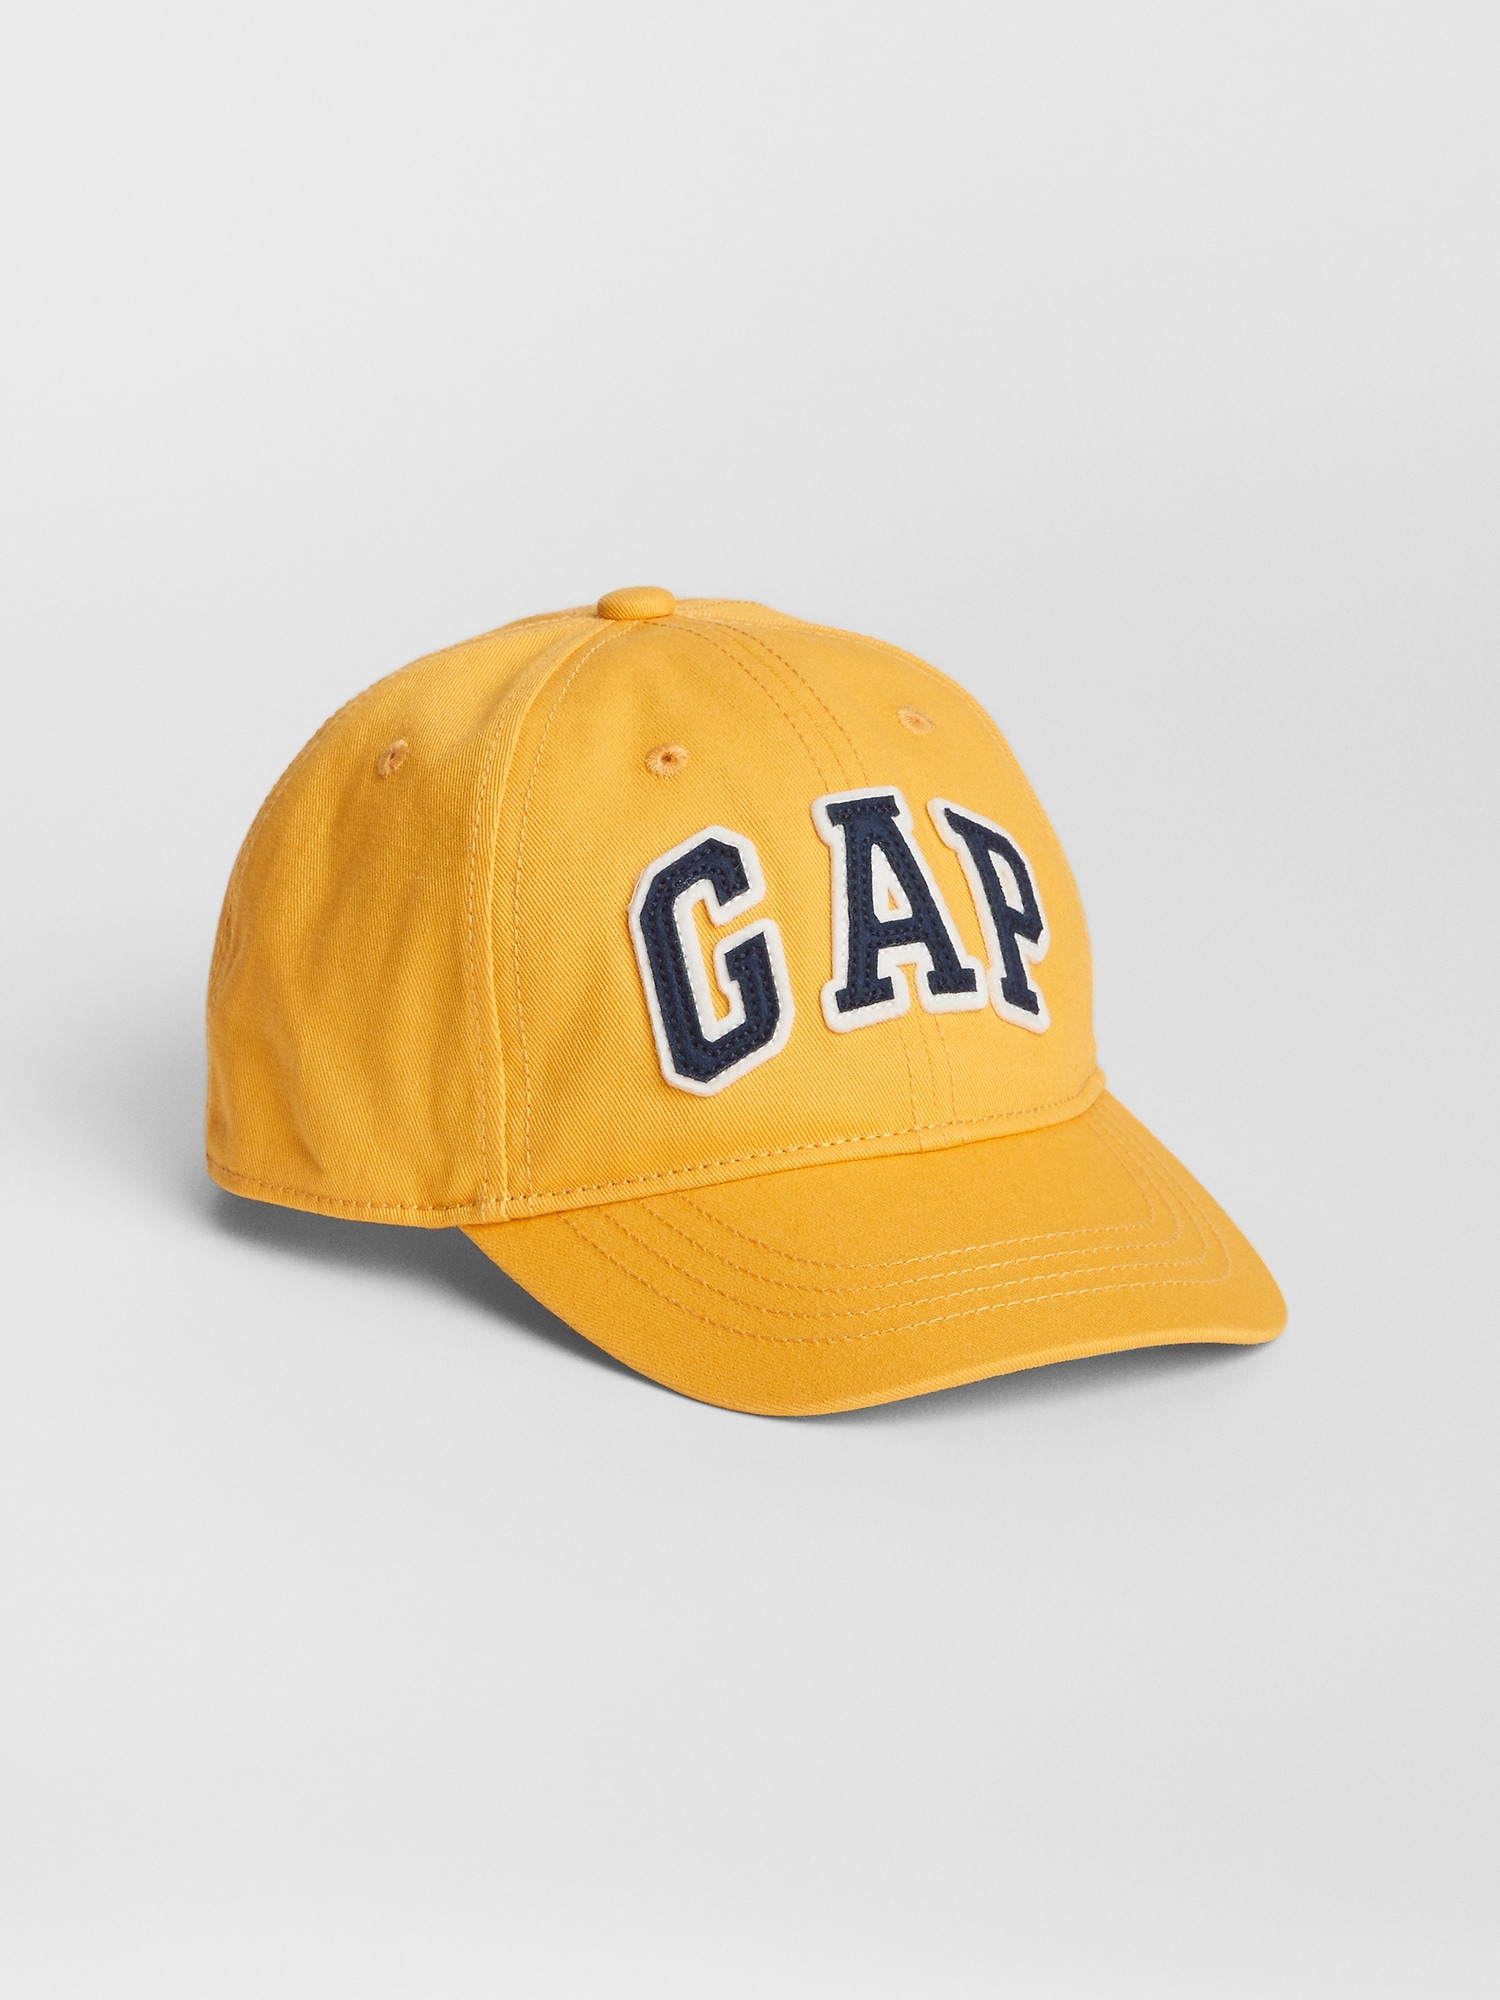 gap toddler cap